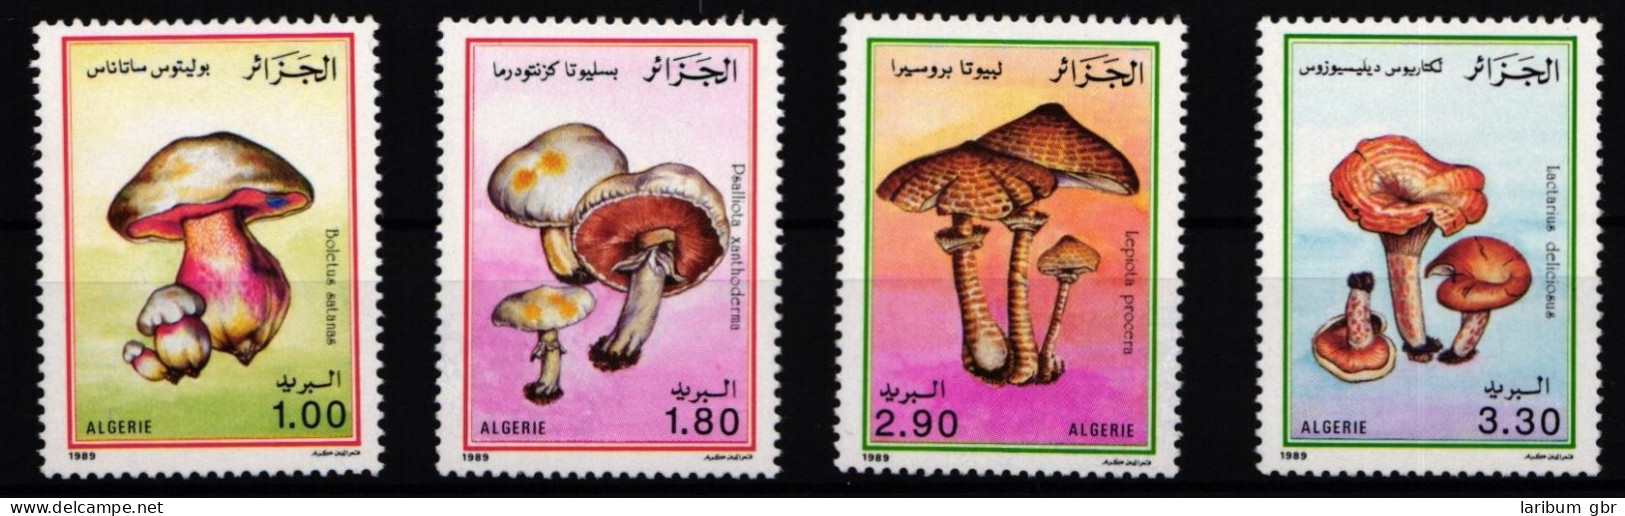 Algerien 1010-1013 Postfrisch Pilze #JA185 - Algeria (1962-...)